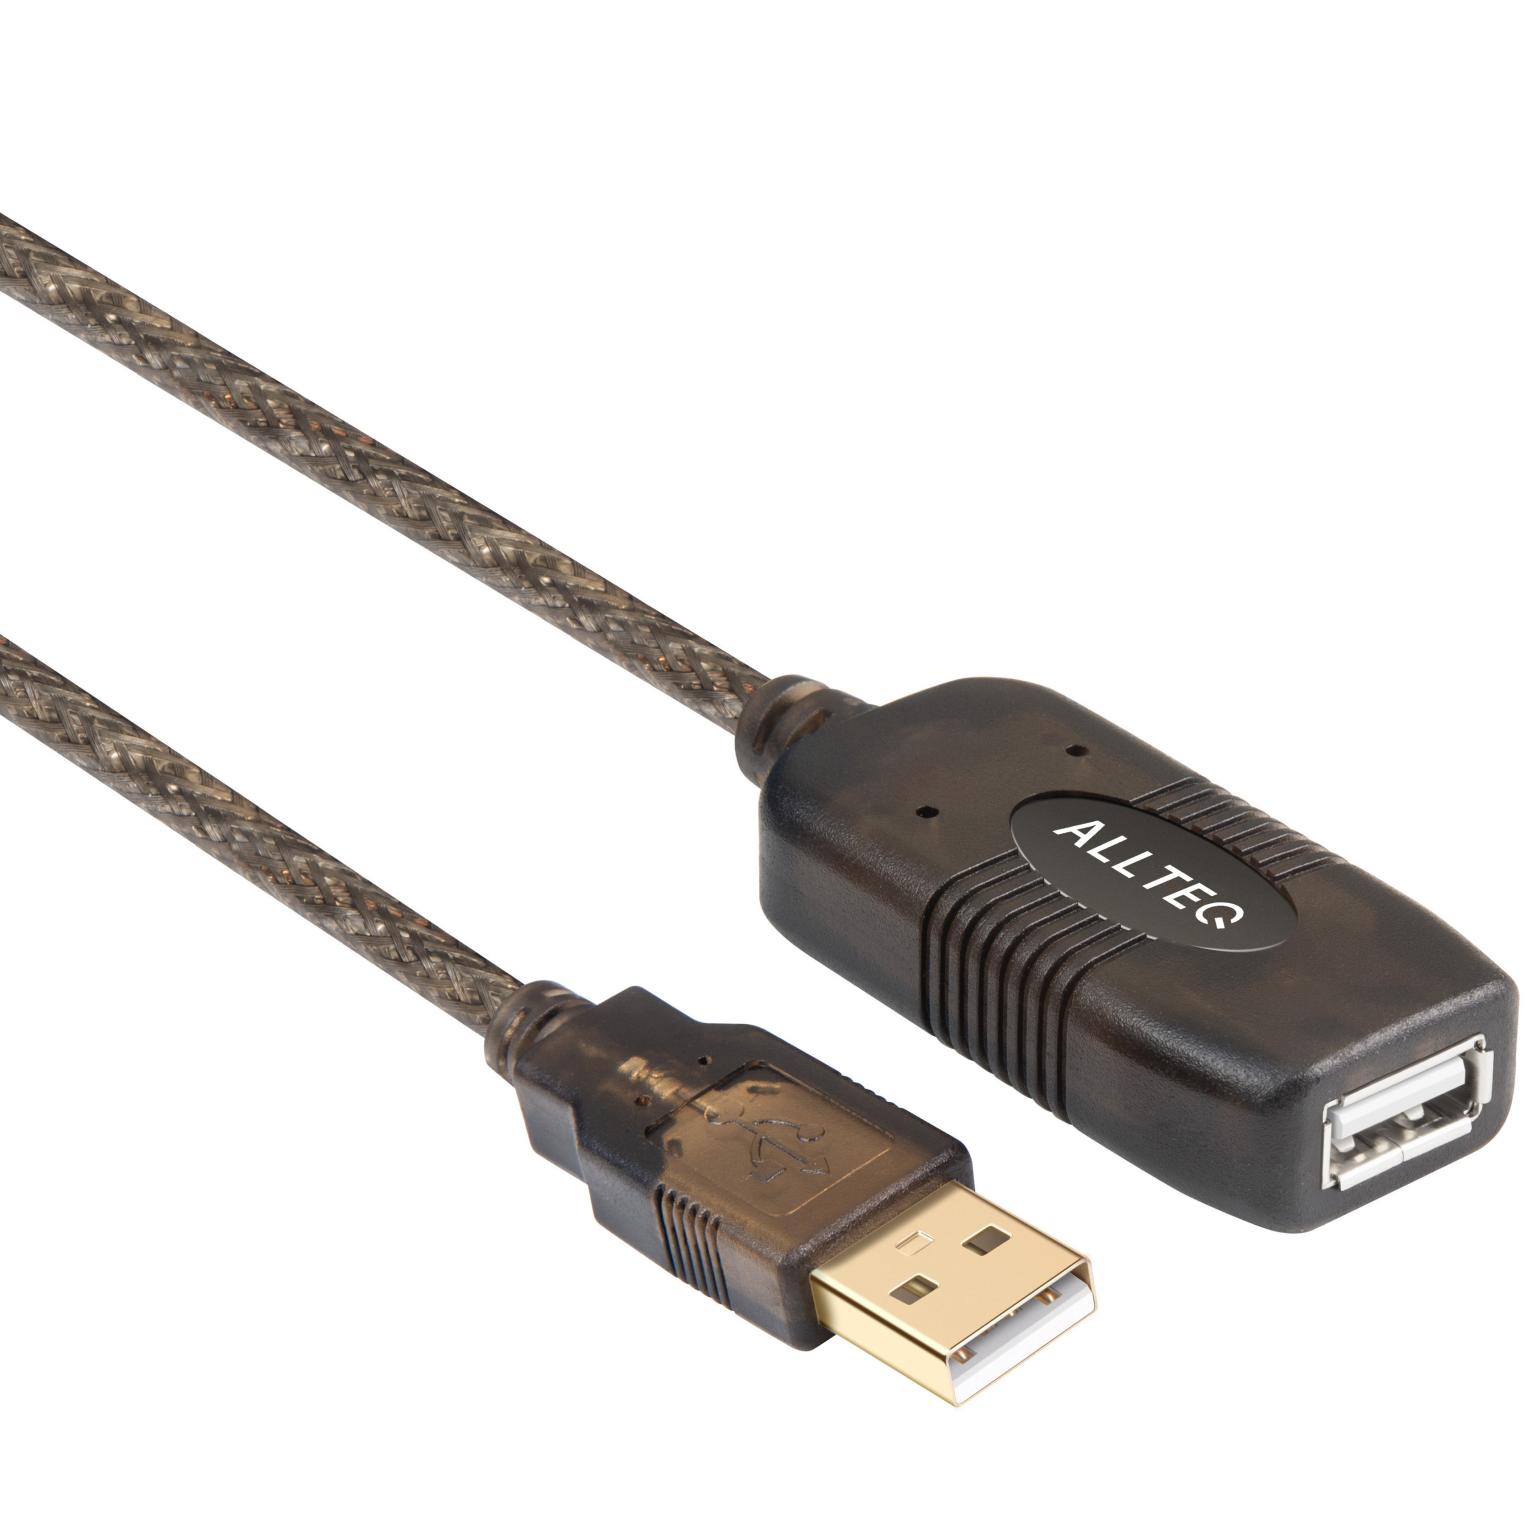 USB verlengkabel met versterker - Allteq